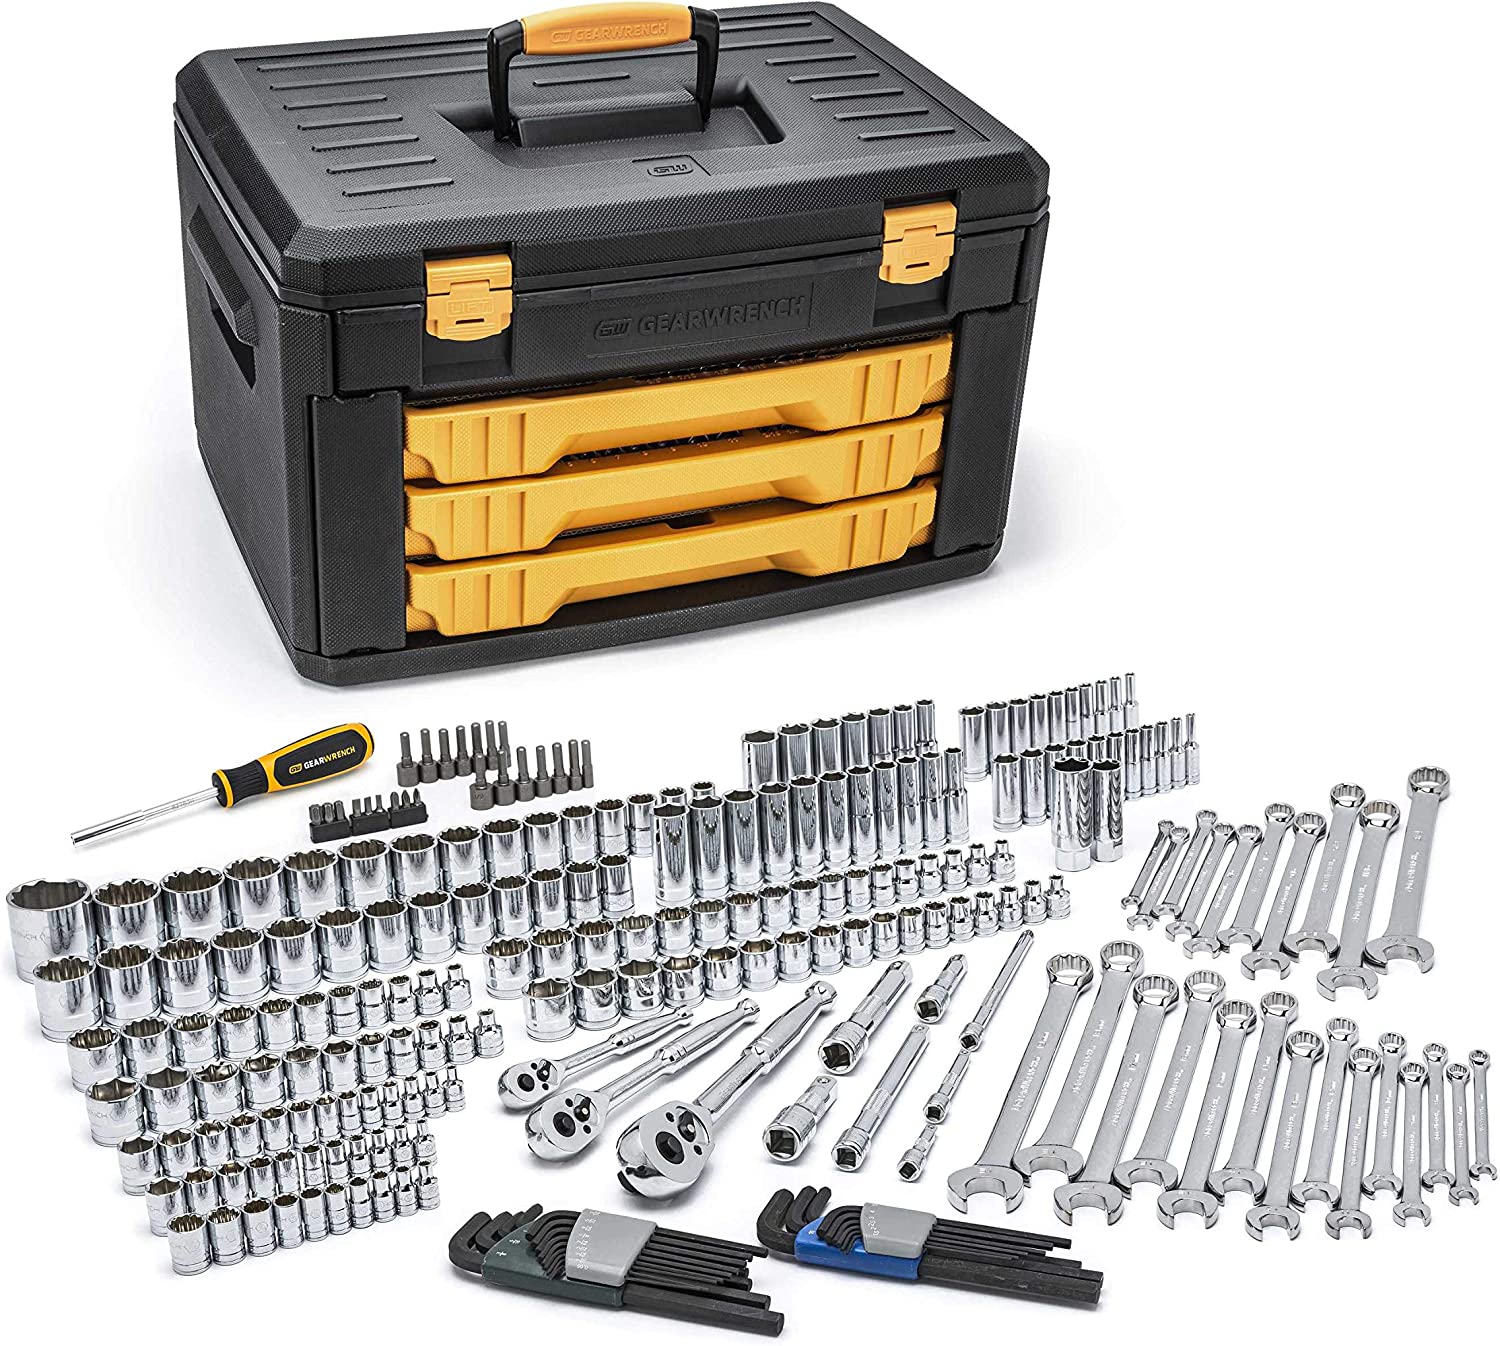 GEARWRENCH 239 Pc. Mechanics Tool Set in 3 Drawer Storage Box - 80942, $186.24, Amazon $186.24